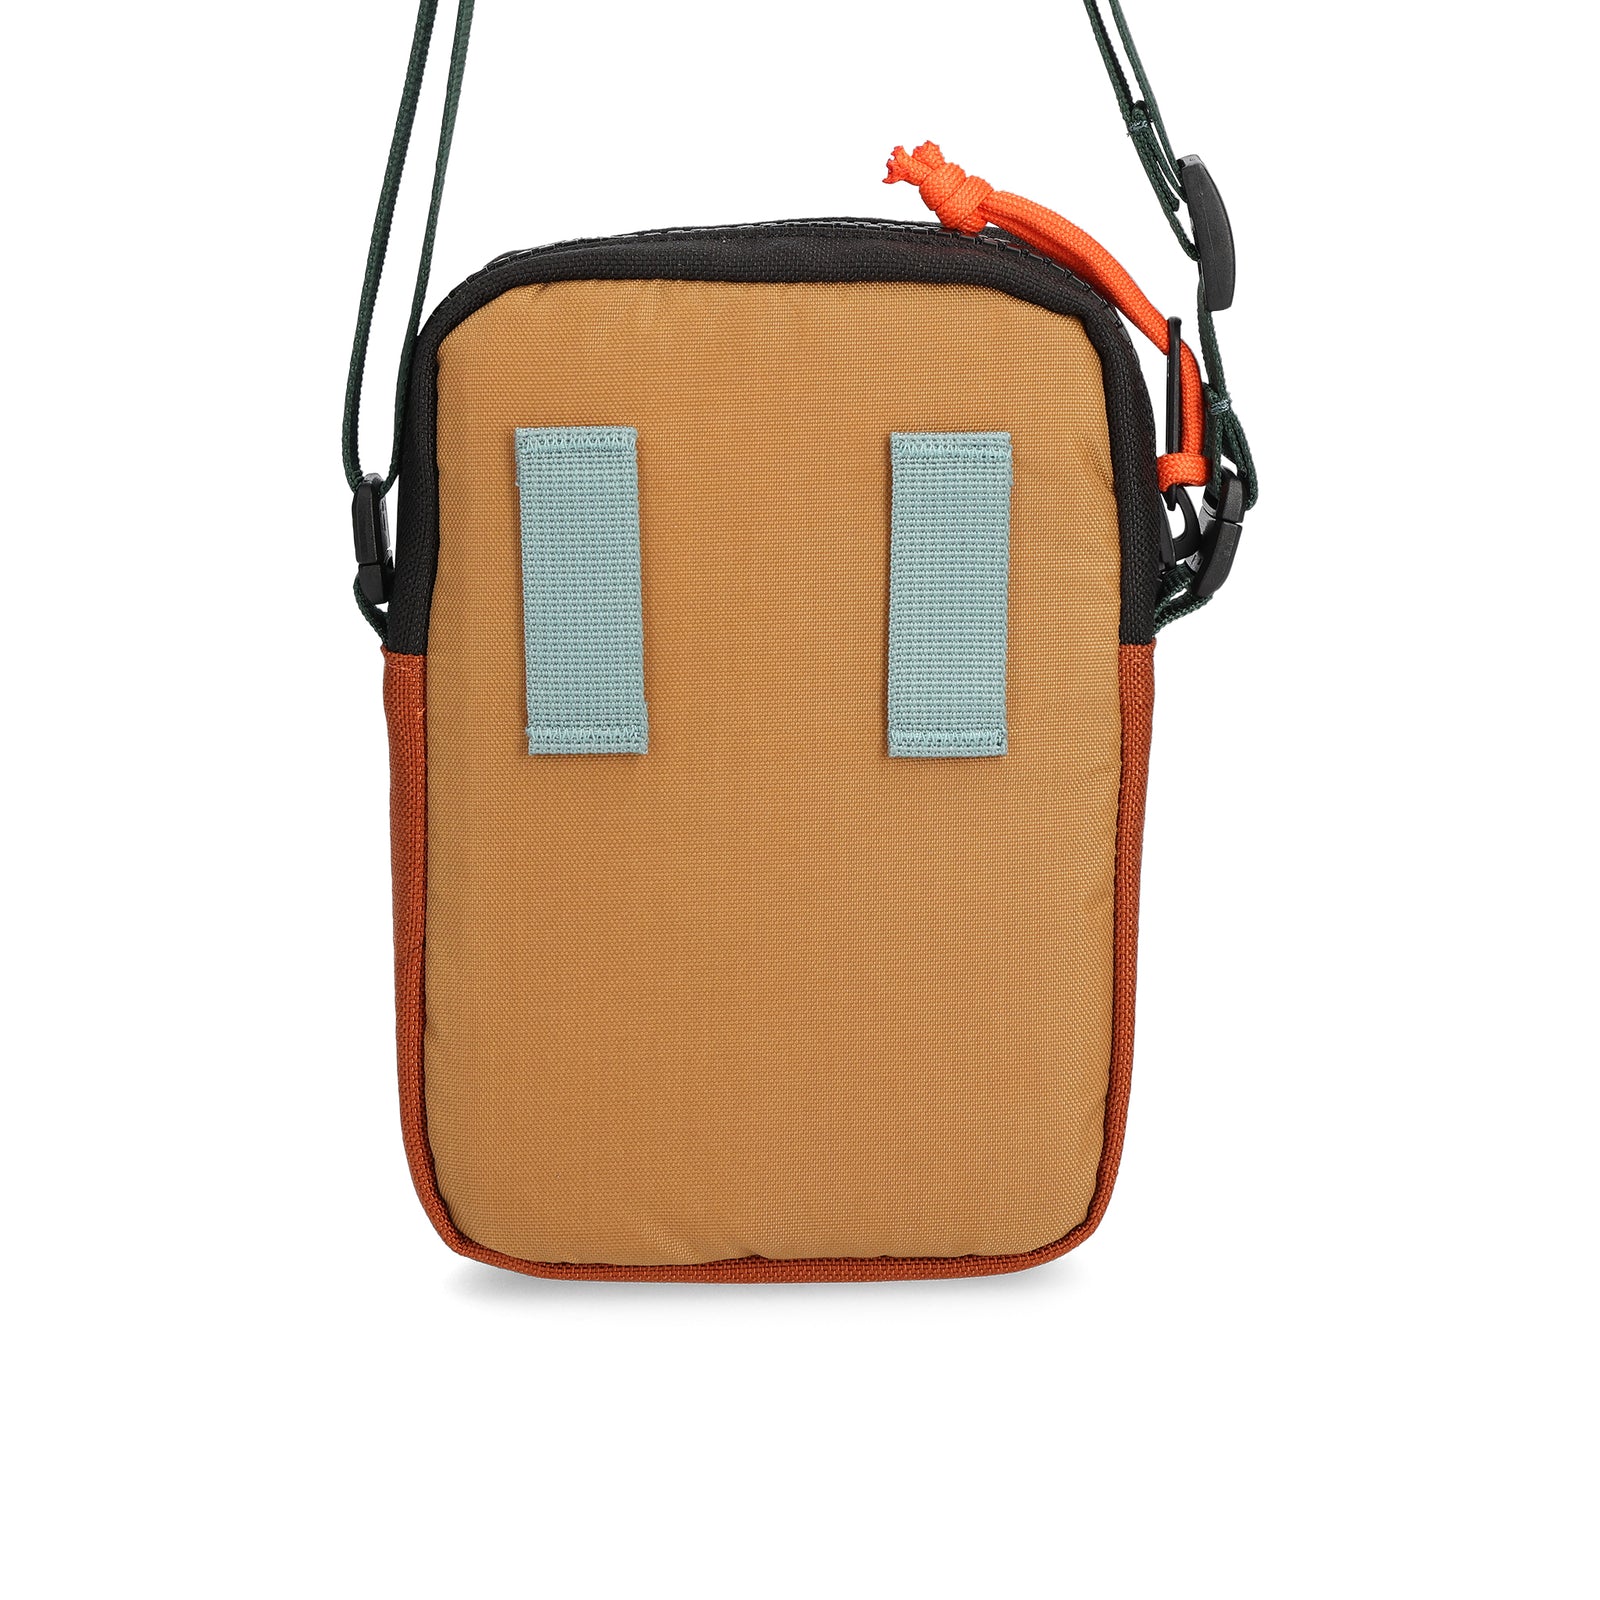 Back View of Topo Designs Mini Shoulder Bag in "Clay / Khaki"